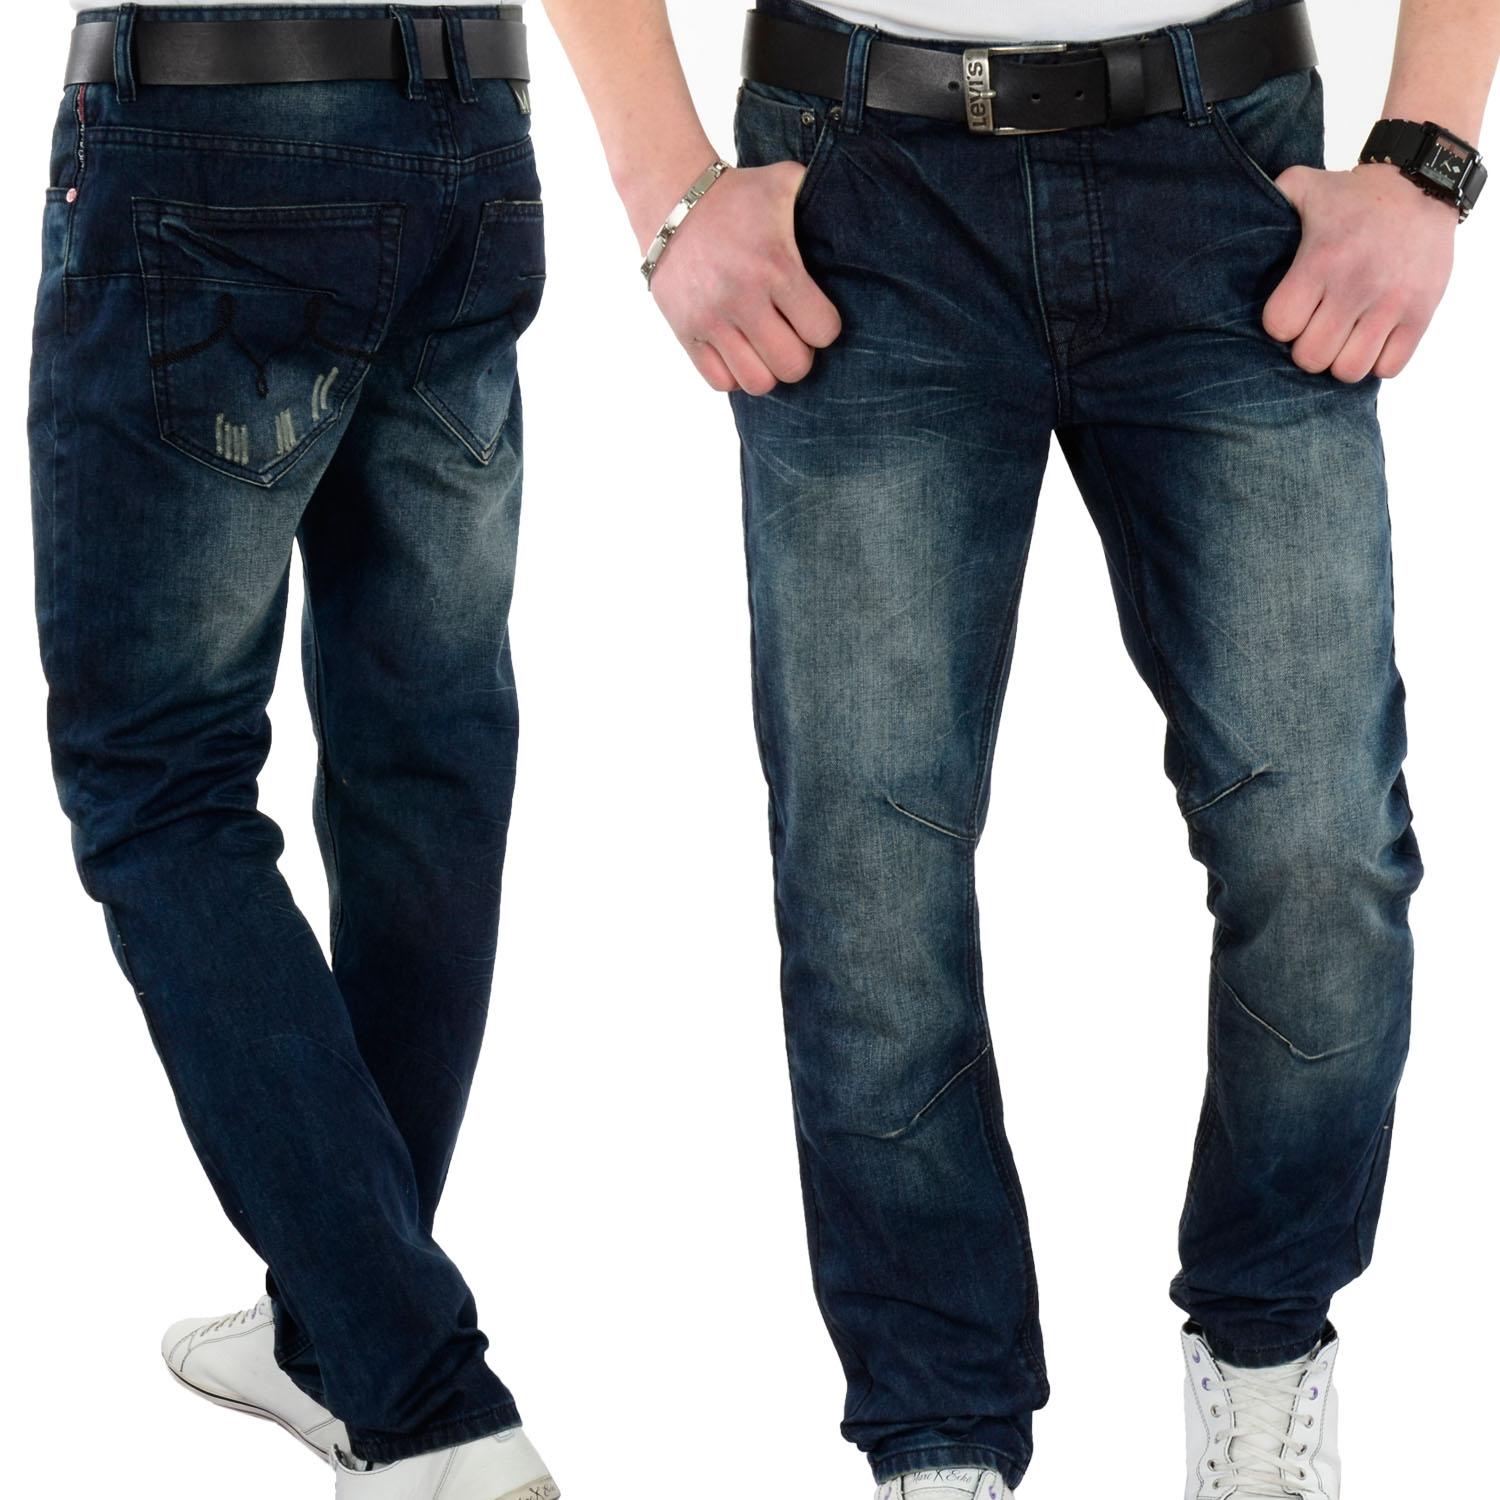 Foto Patria Mardini Hombres Slim Fit Jeans De Color Azul Oscuro